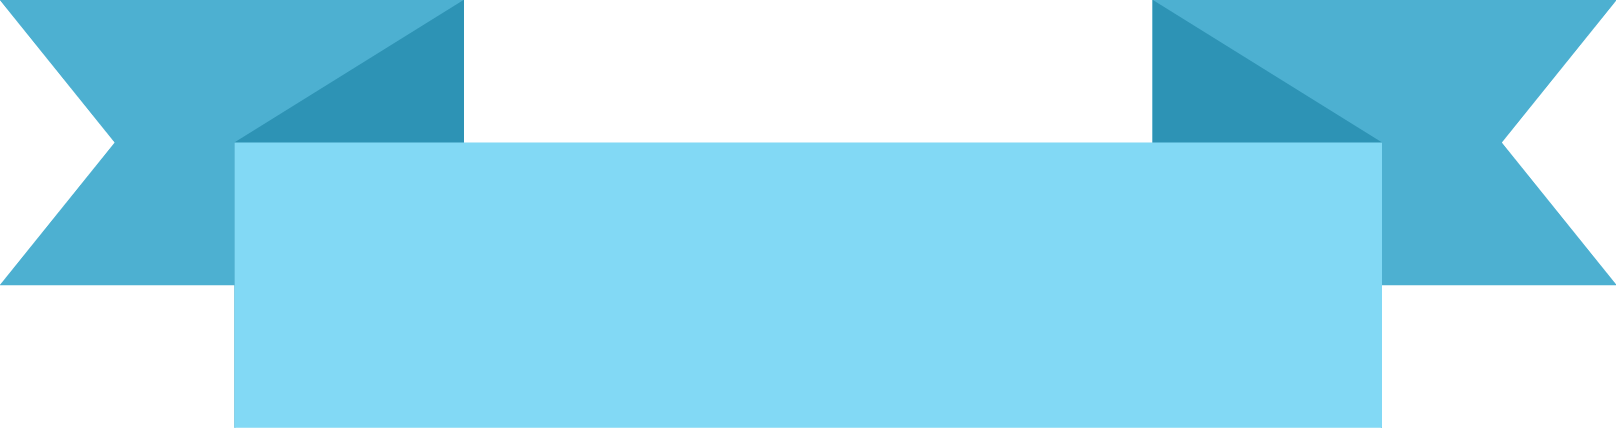 Brand Logo Font - Blue Ribbon Banner Png (1616x428)